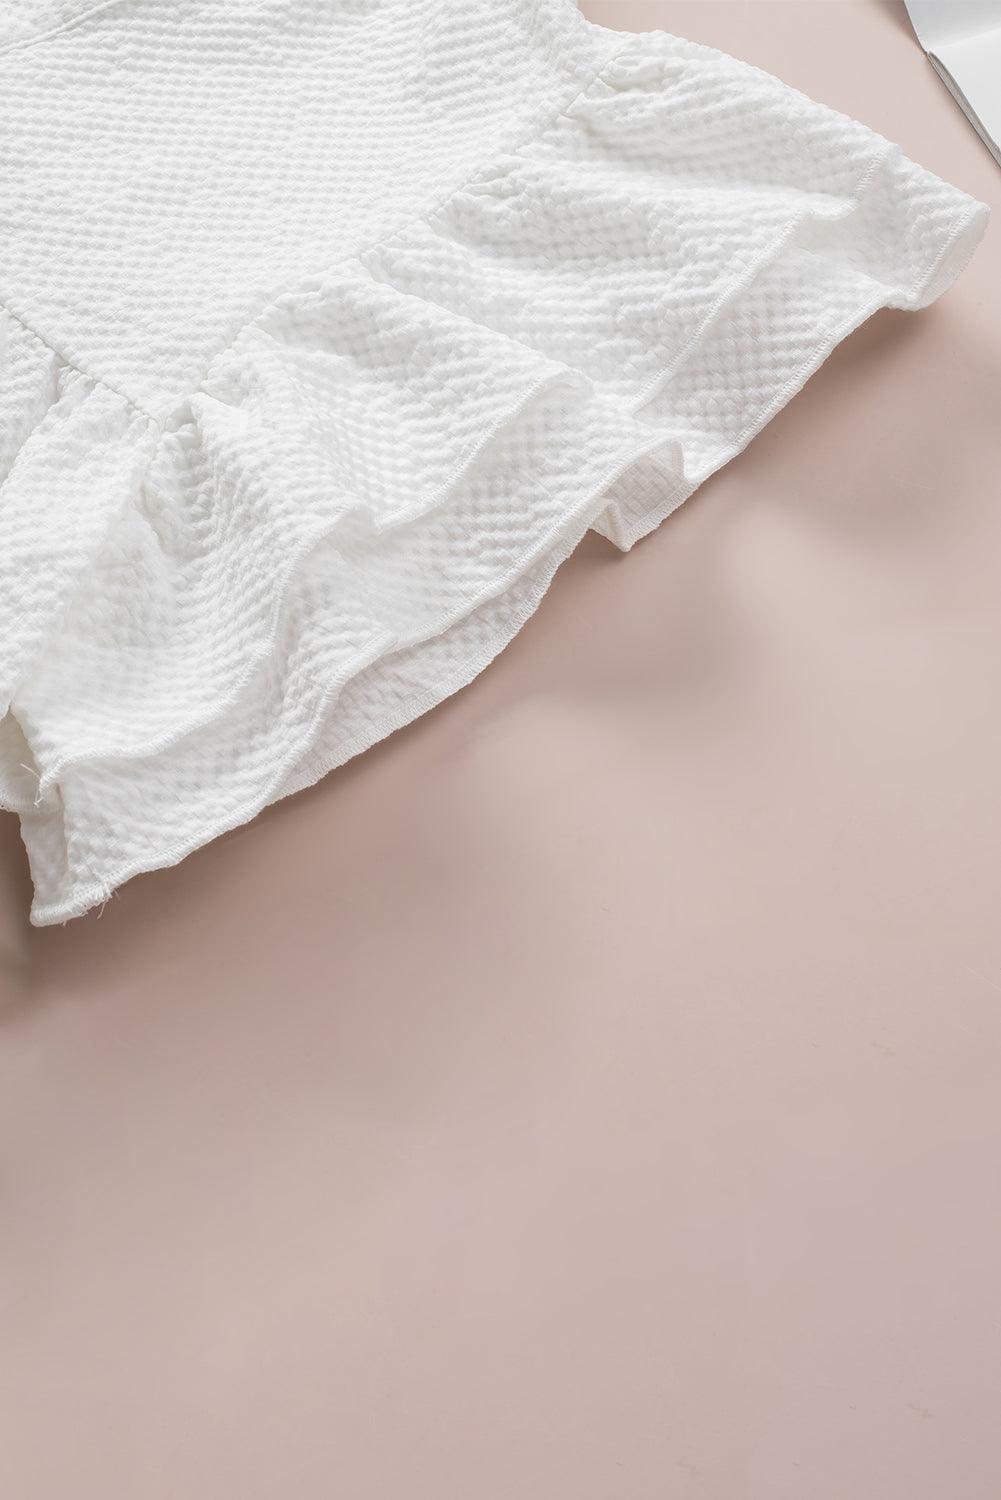 Flutter Sleeve Notch Neck White Summer Top for Women